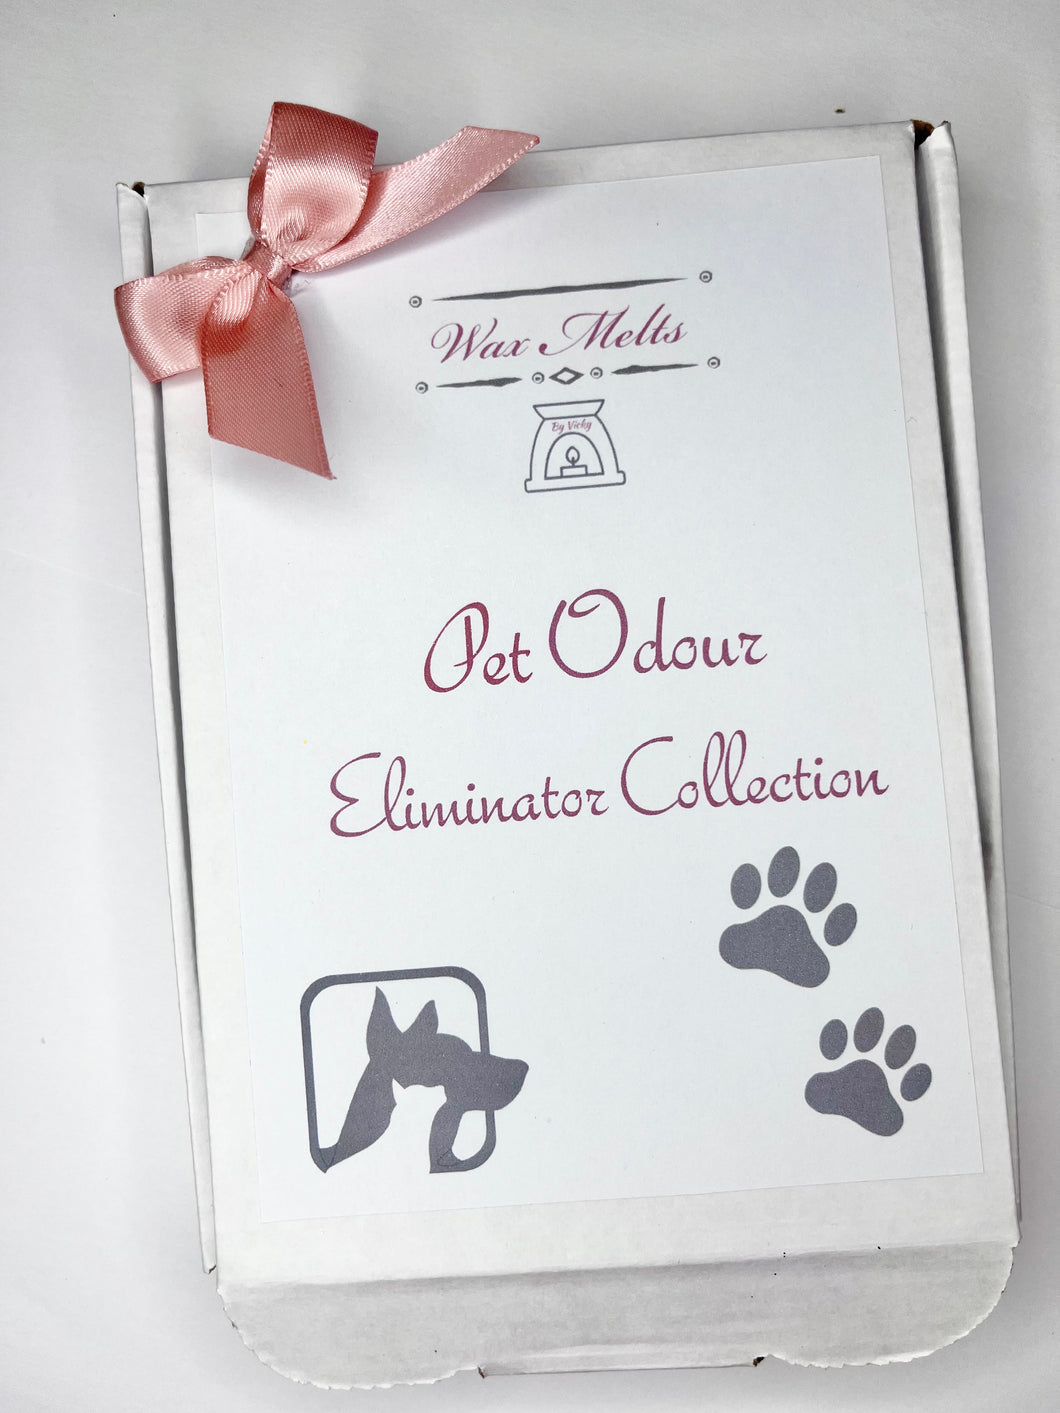 NEW!! Pet Odour Eliminator Collection